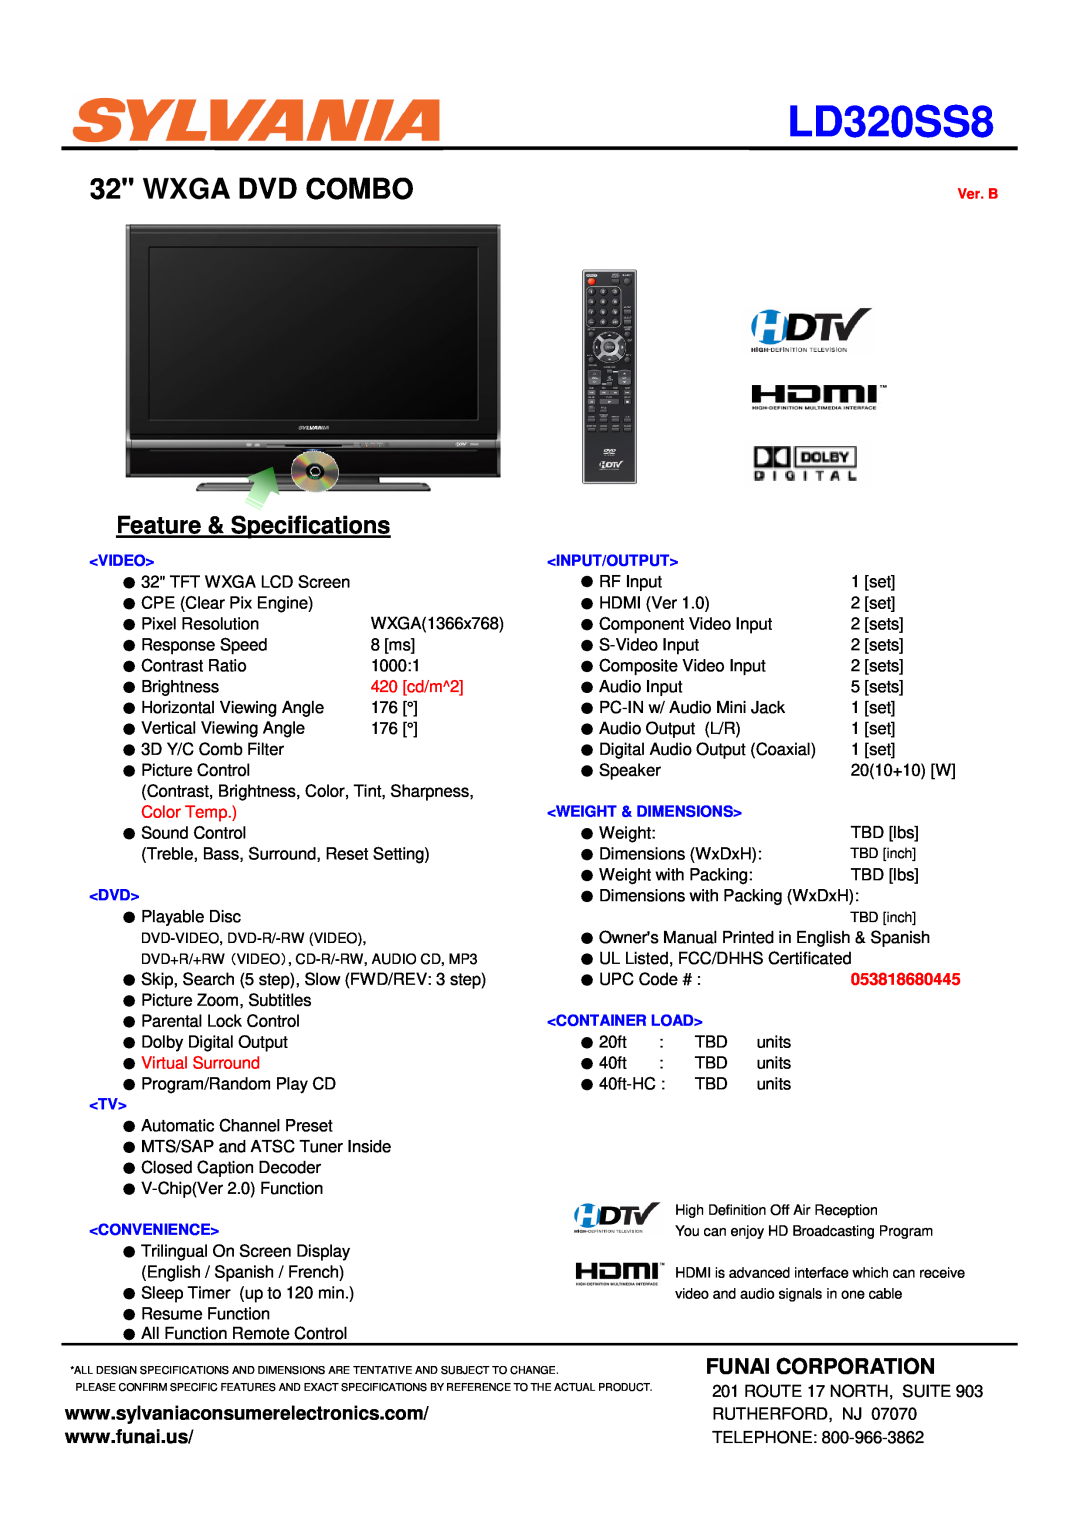 Sylvania LD320SS8 specifications Wxga Dvd Combo, Feature & Specifications, Funai Corporation, 420 cd/m2, Color Temp 